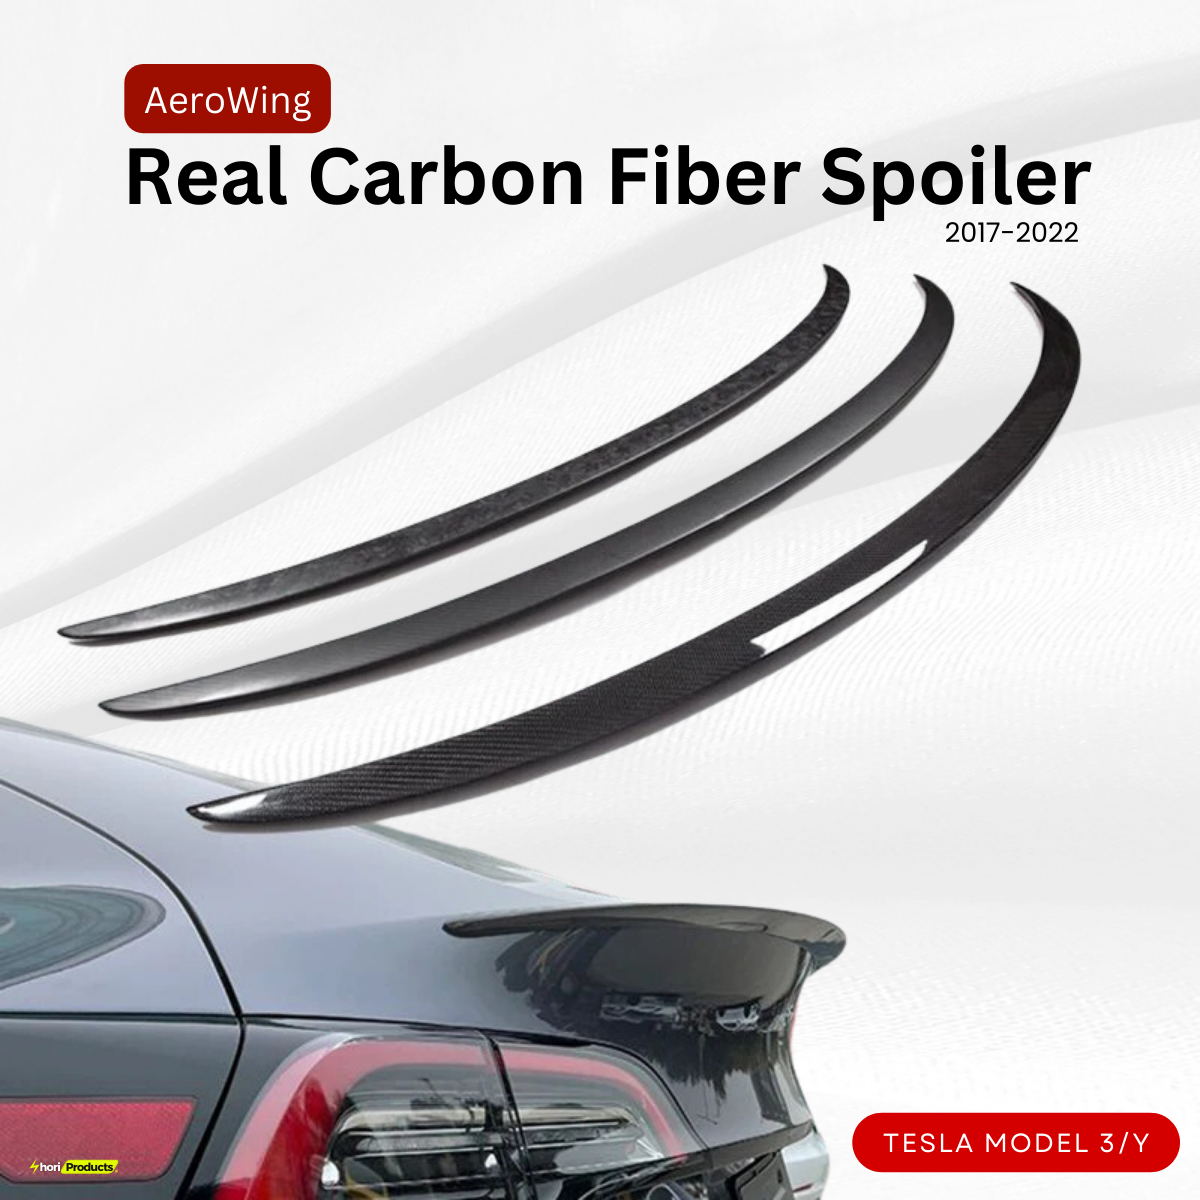 AeroWing: Real Carbon Fiber Spoiler For Tesla Model 3 & Y